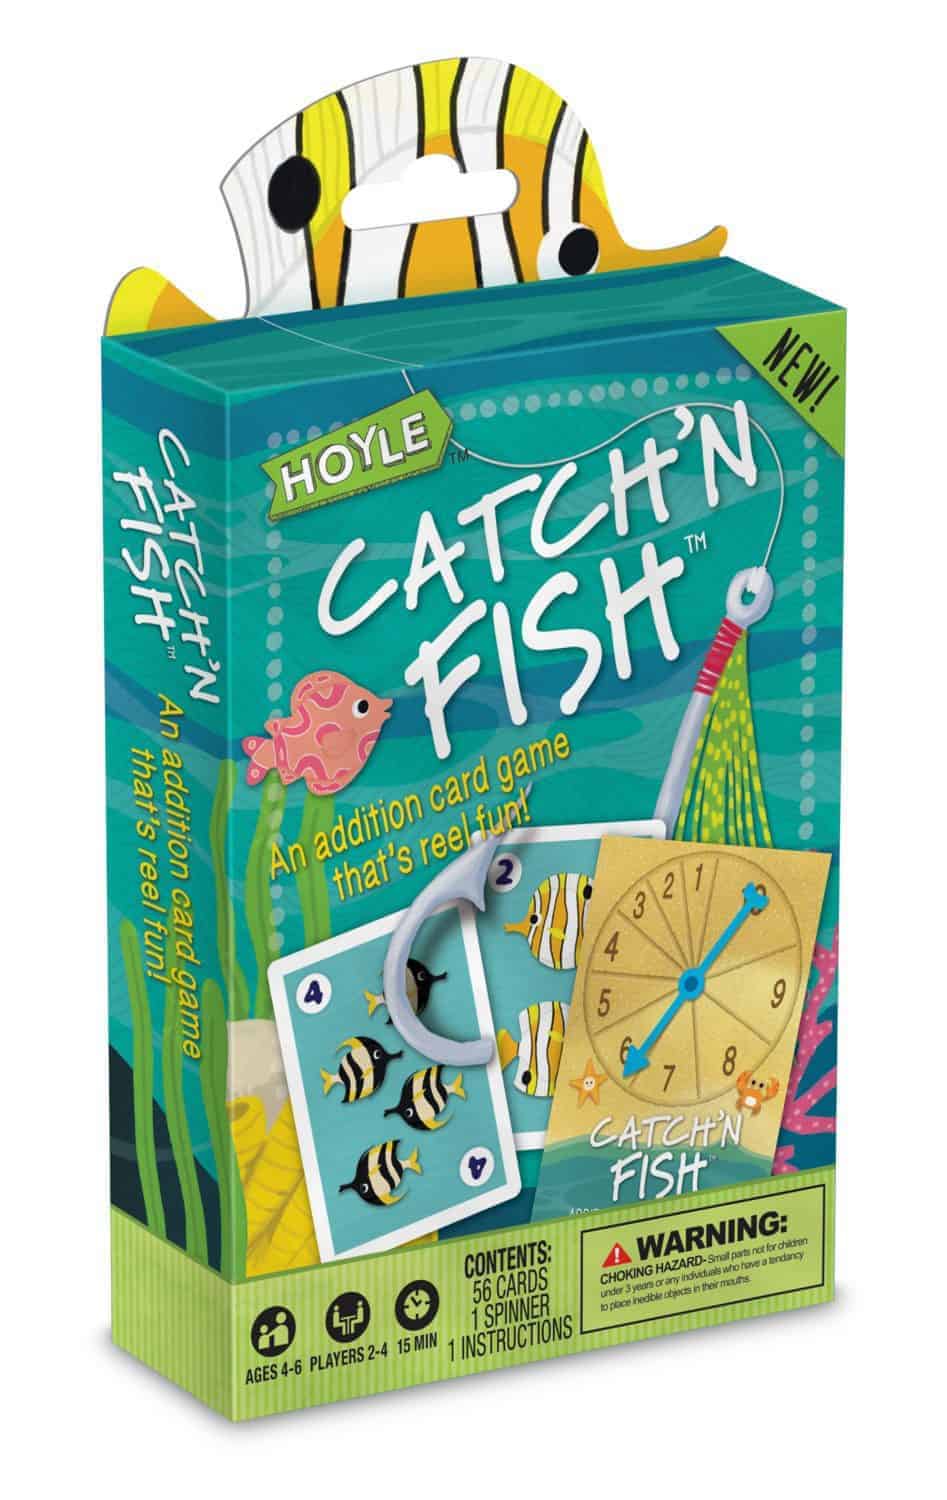 Hoyle Catch ‘N Fish